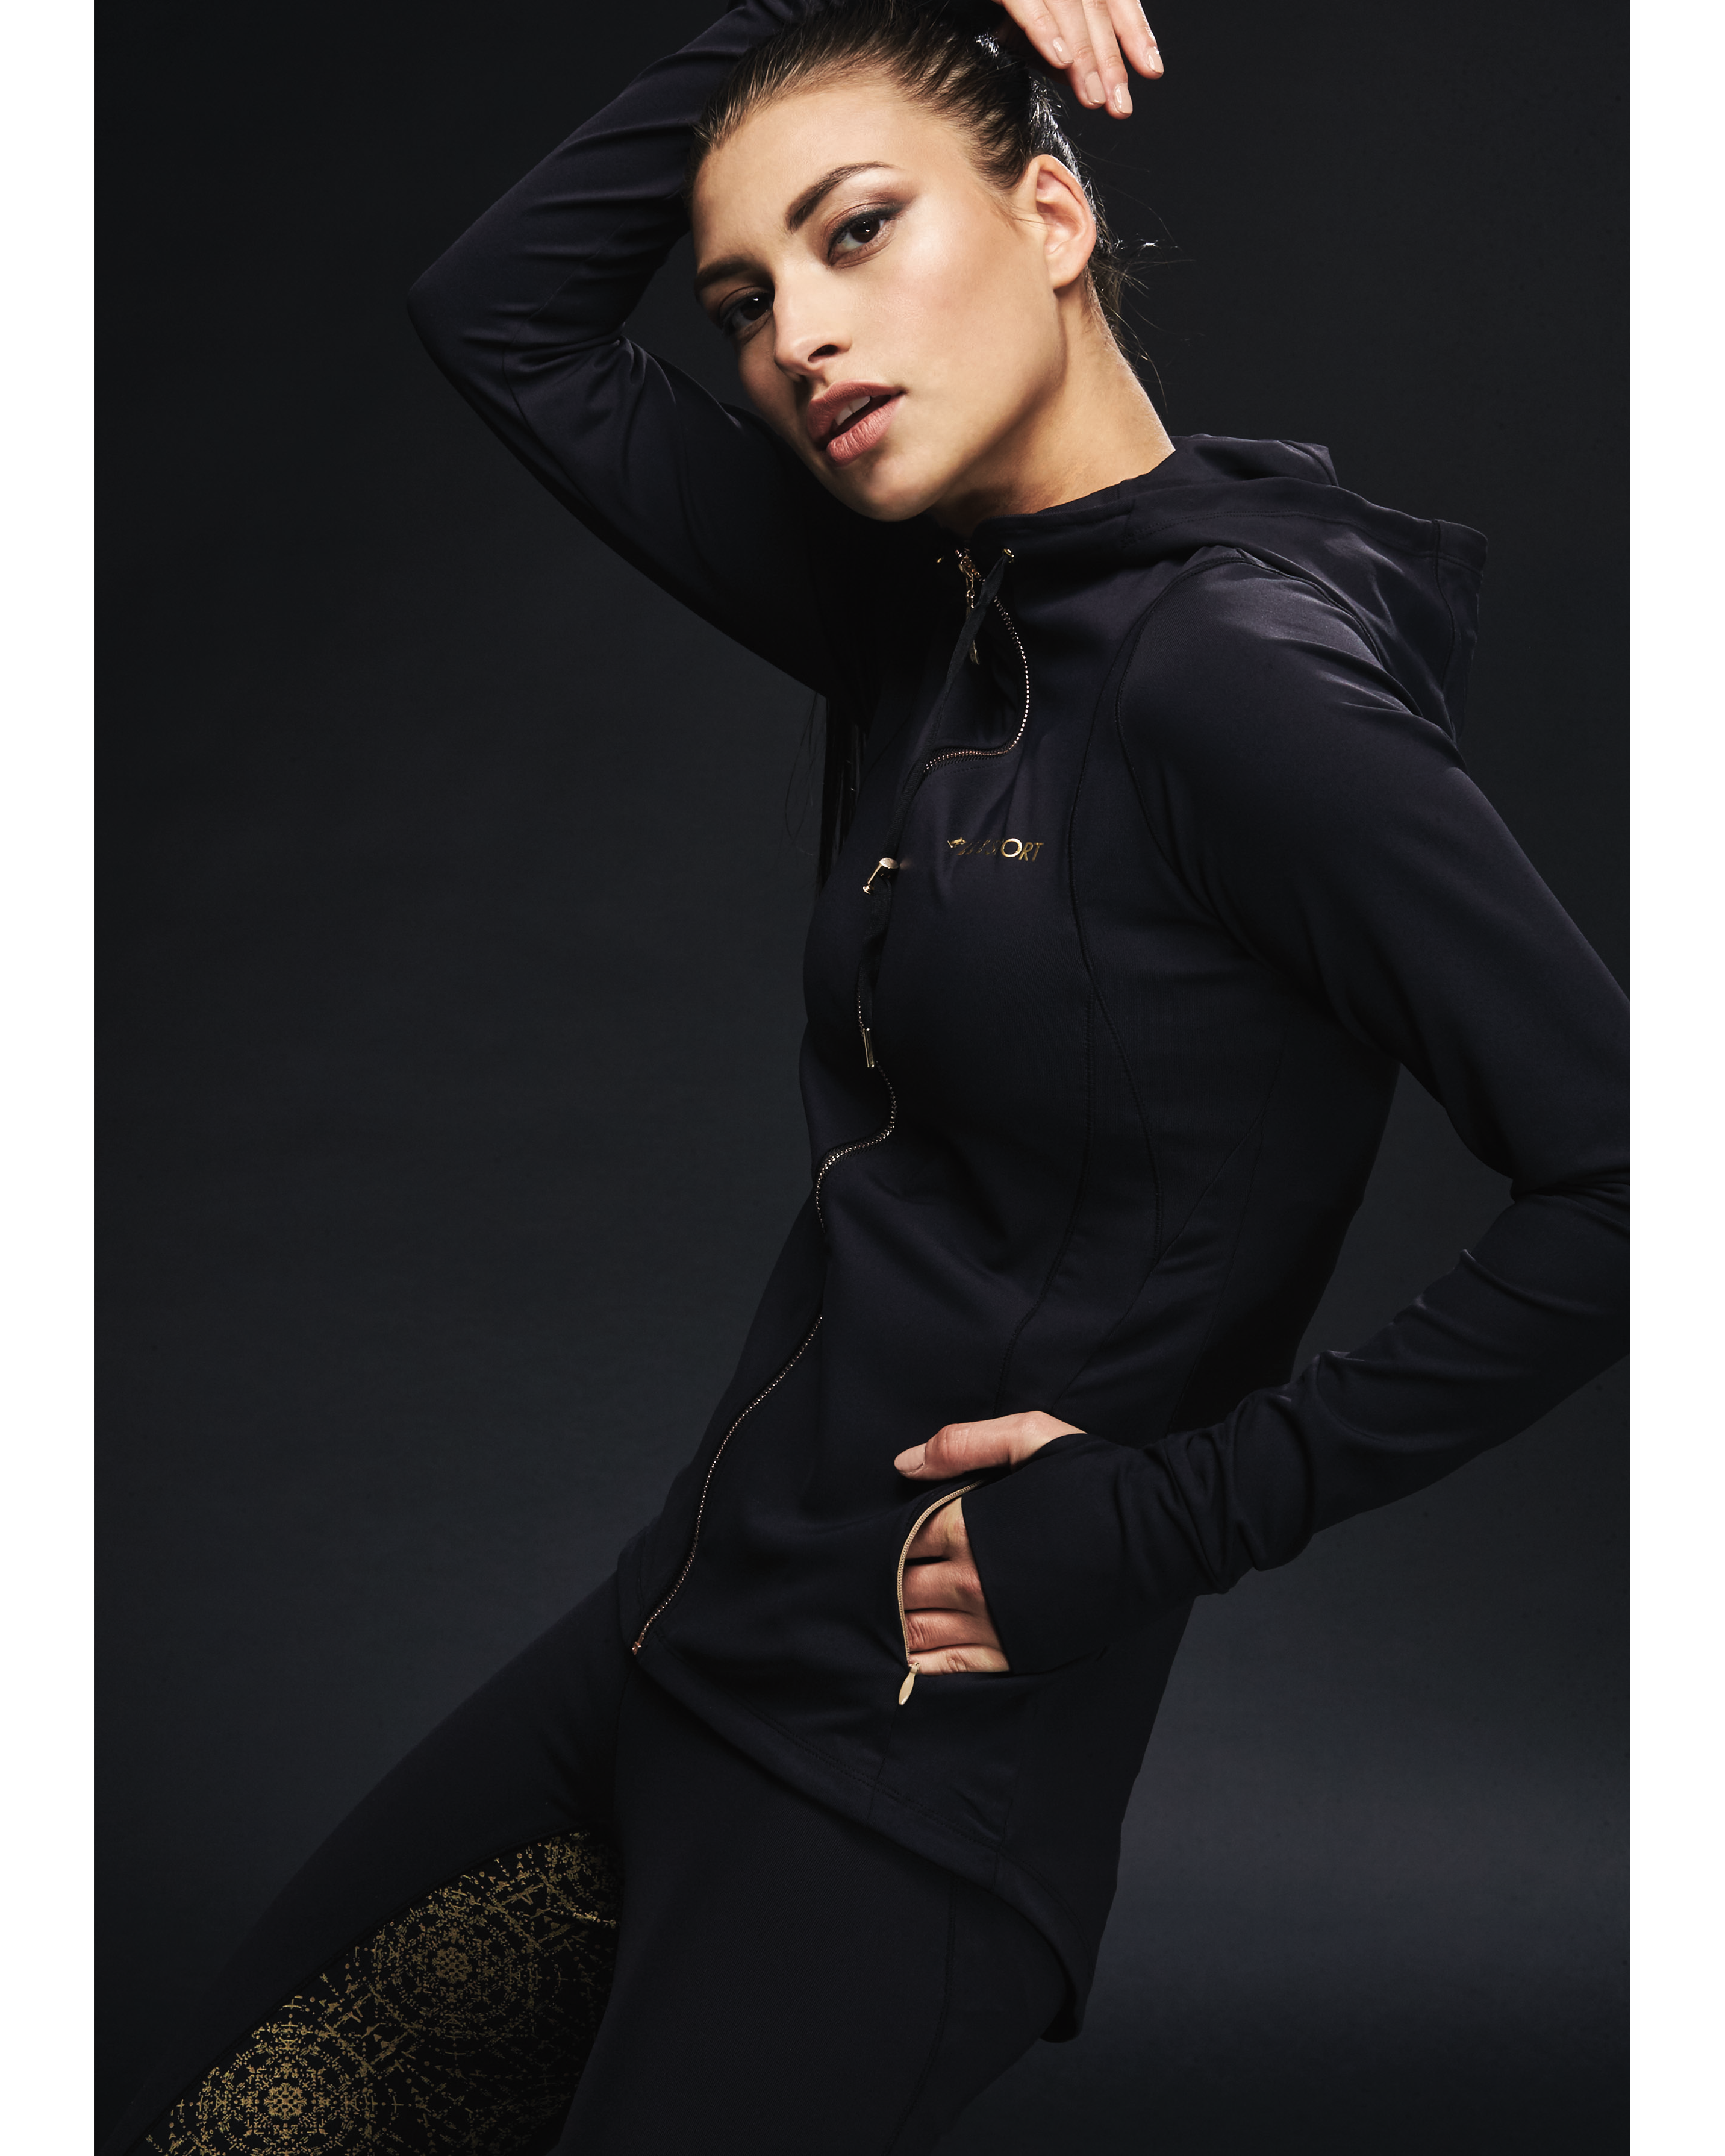 Ellesport Sleek Energising Sports Jacket with Hood – Black/Gold